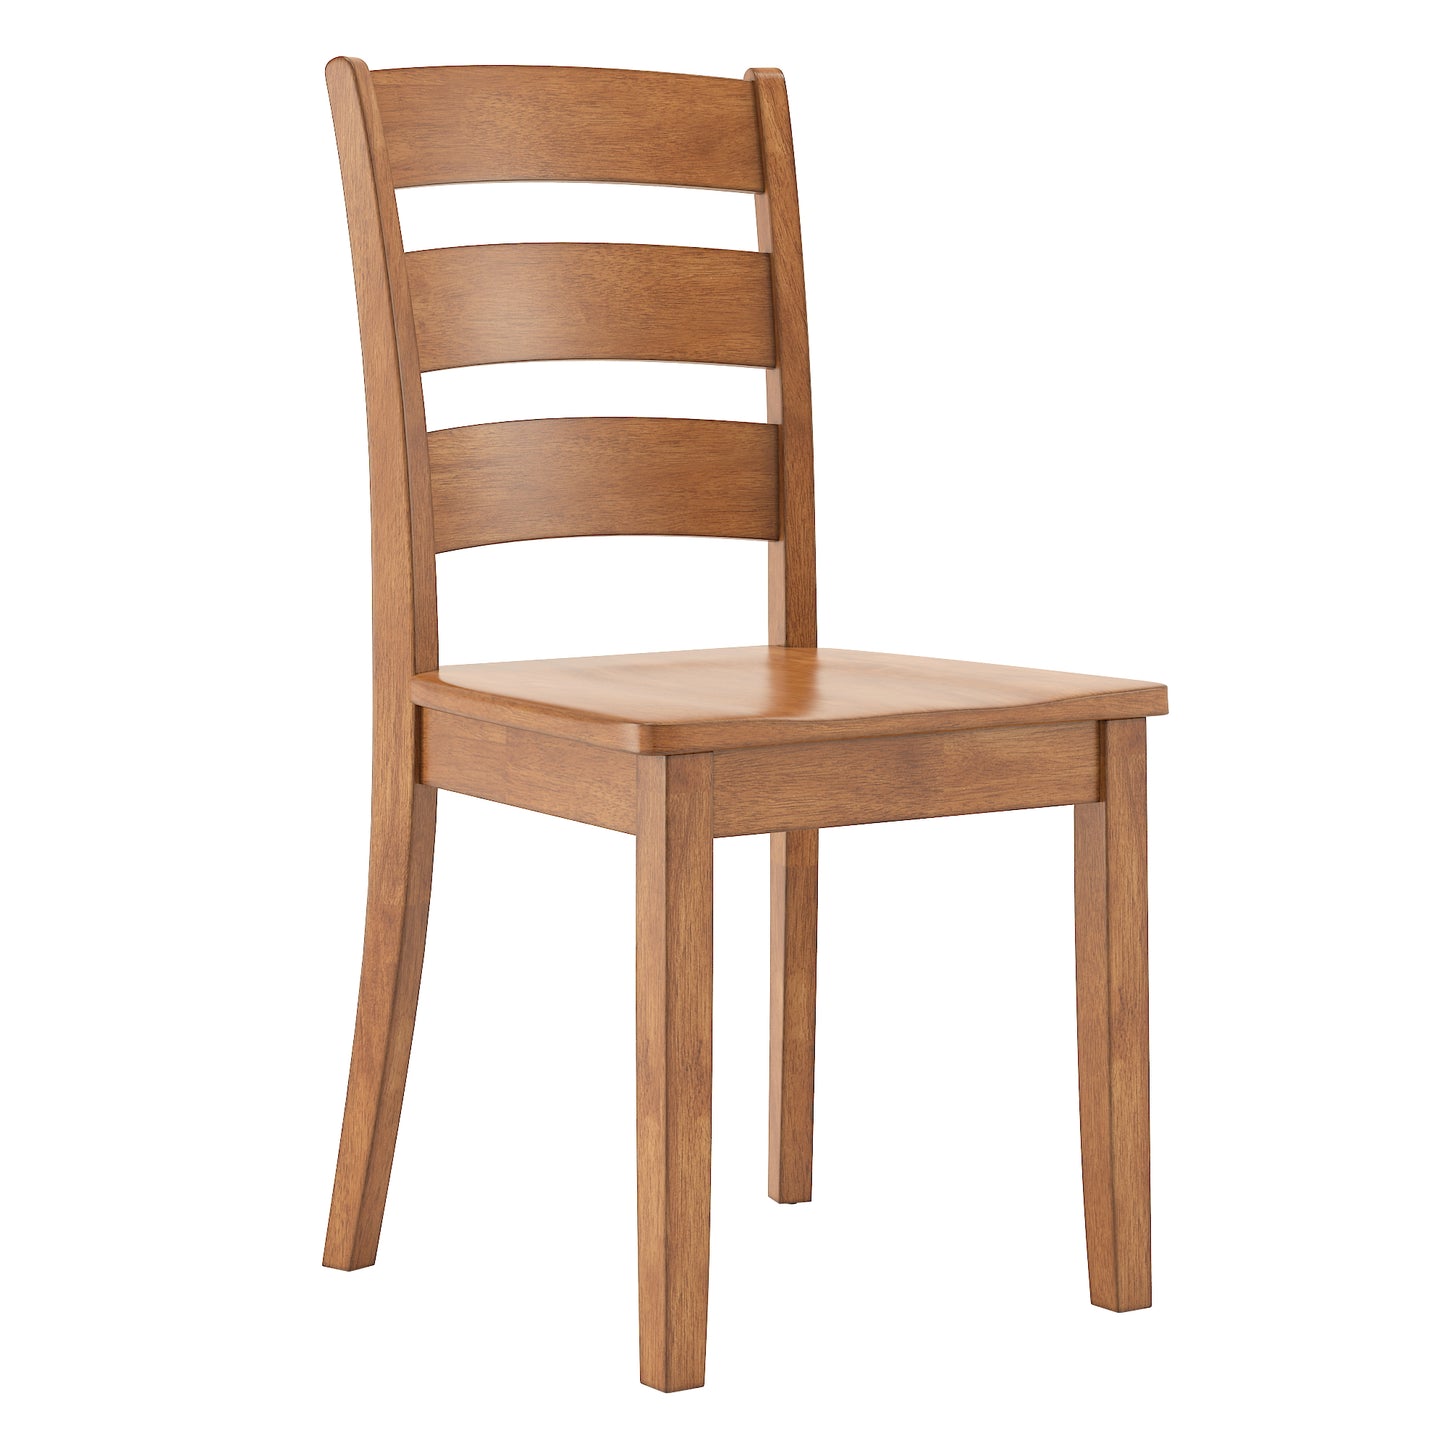 60-inch Rectangular Oak Finish Dining Set - Ladder Back Chairs, 7-Piece Set